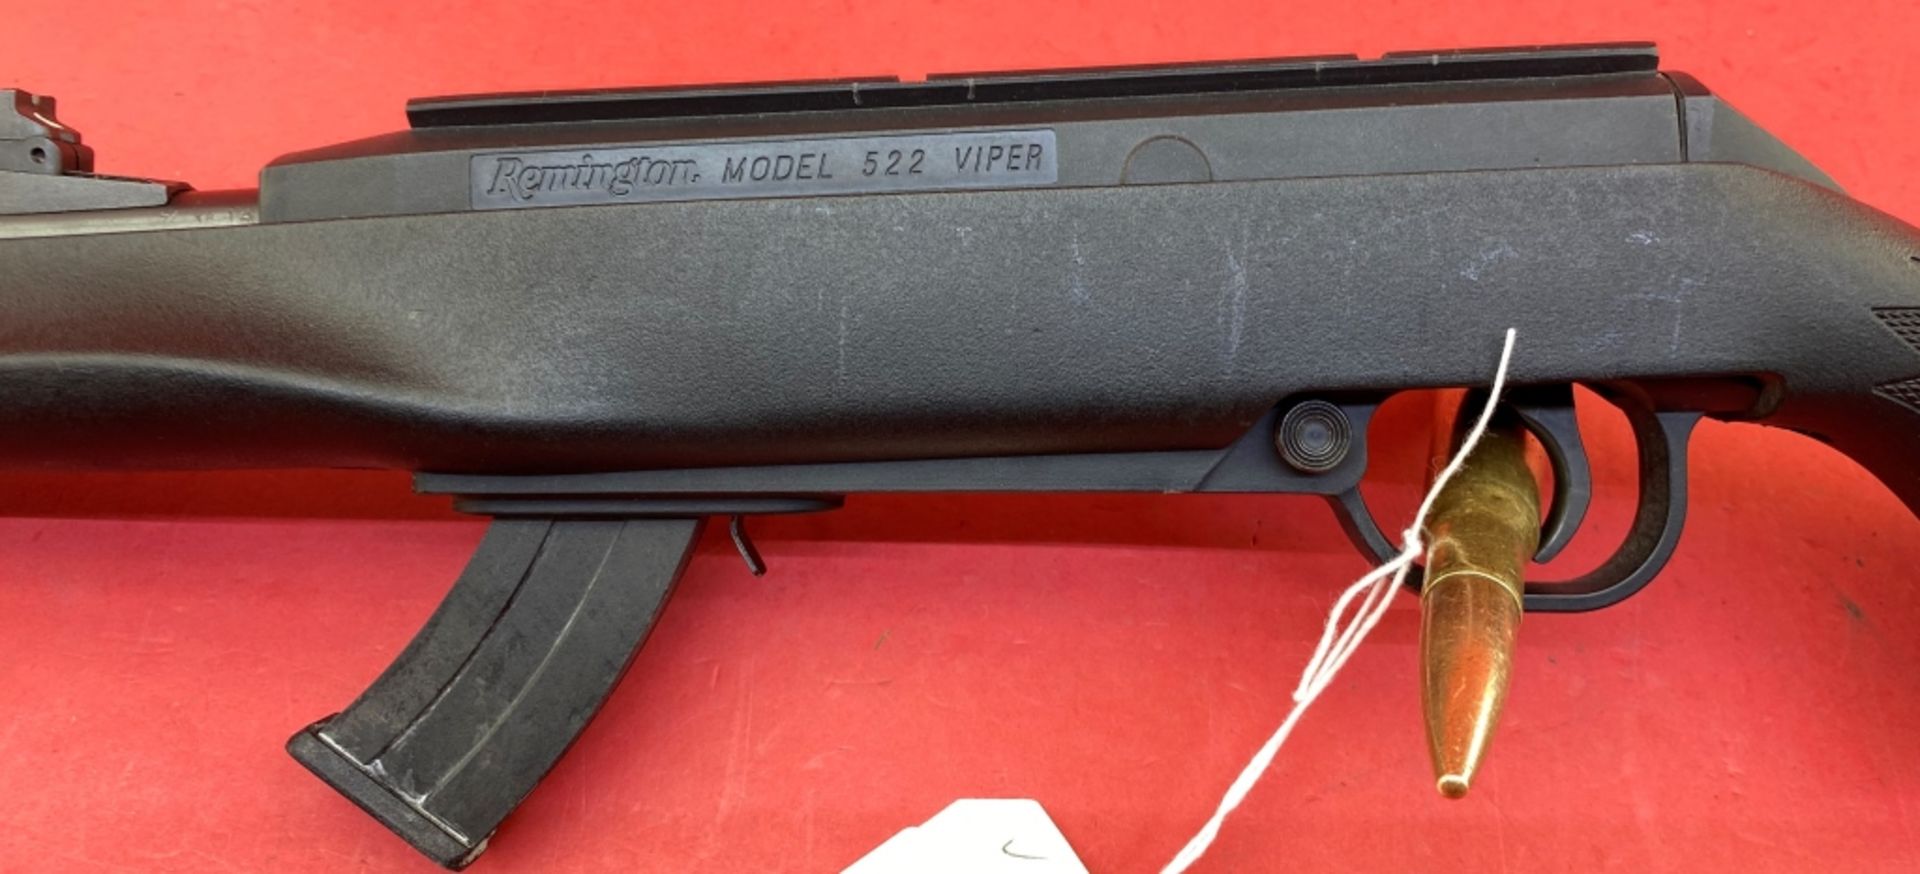 Remington 522 .22LR Rifle - Image 4 of 5